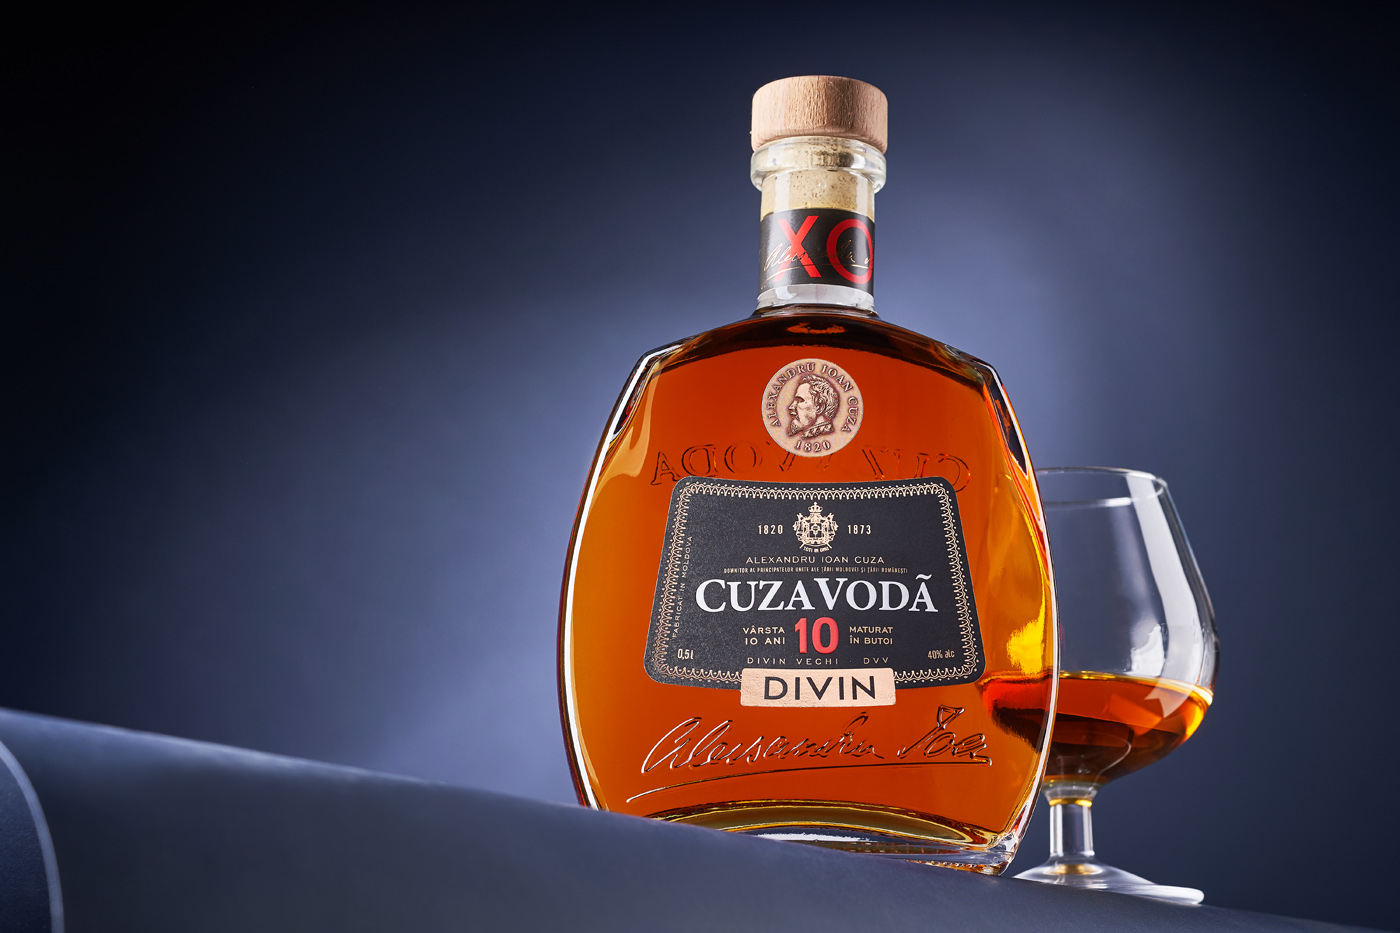 Brandy Bottle and Label Design for Cuza Voda by 43oz Design Studio